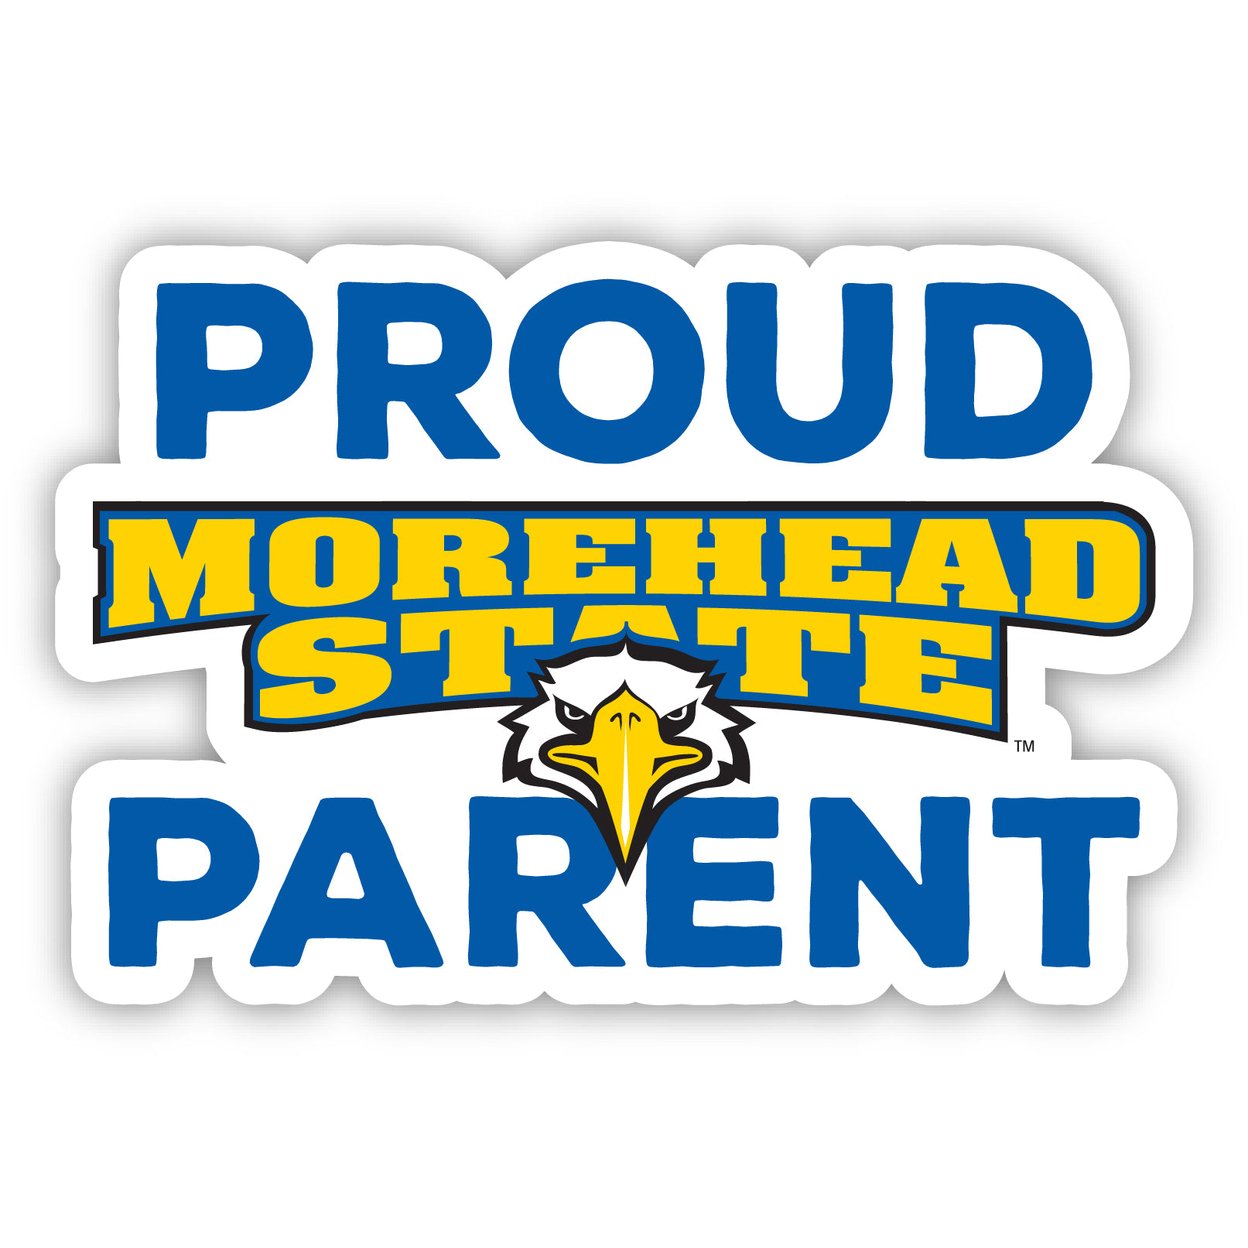 Morehead State University Proud Parent 4 Sticker - (4 Pack)